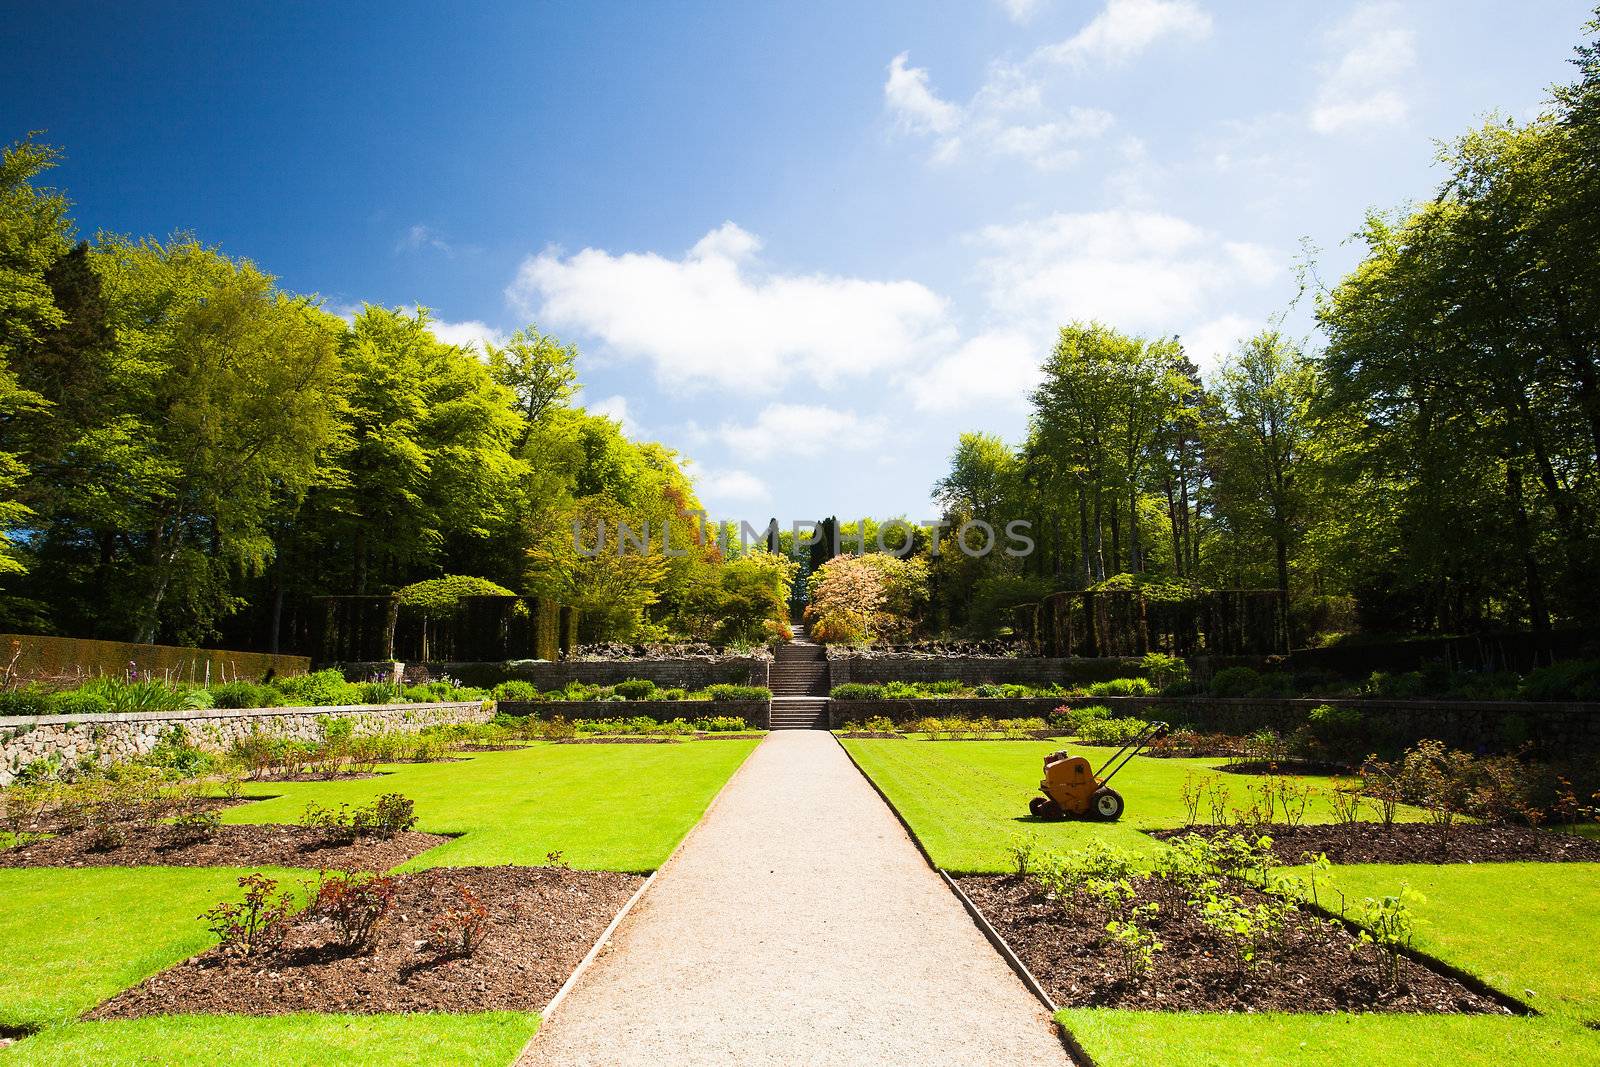 The garden in Castle Drogo in Great Britain